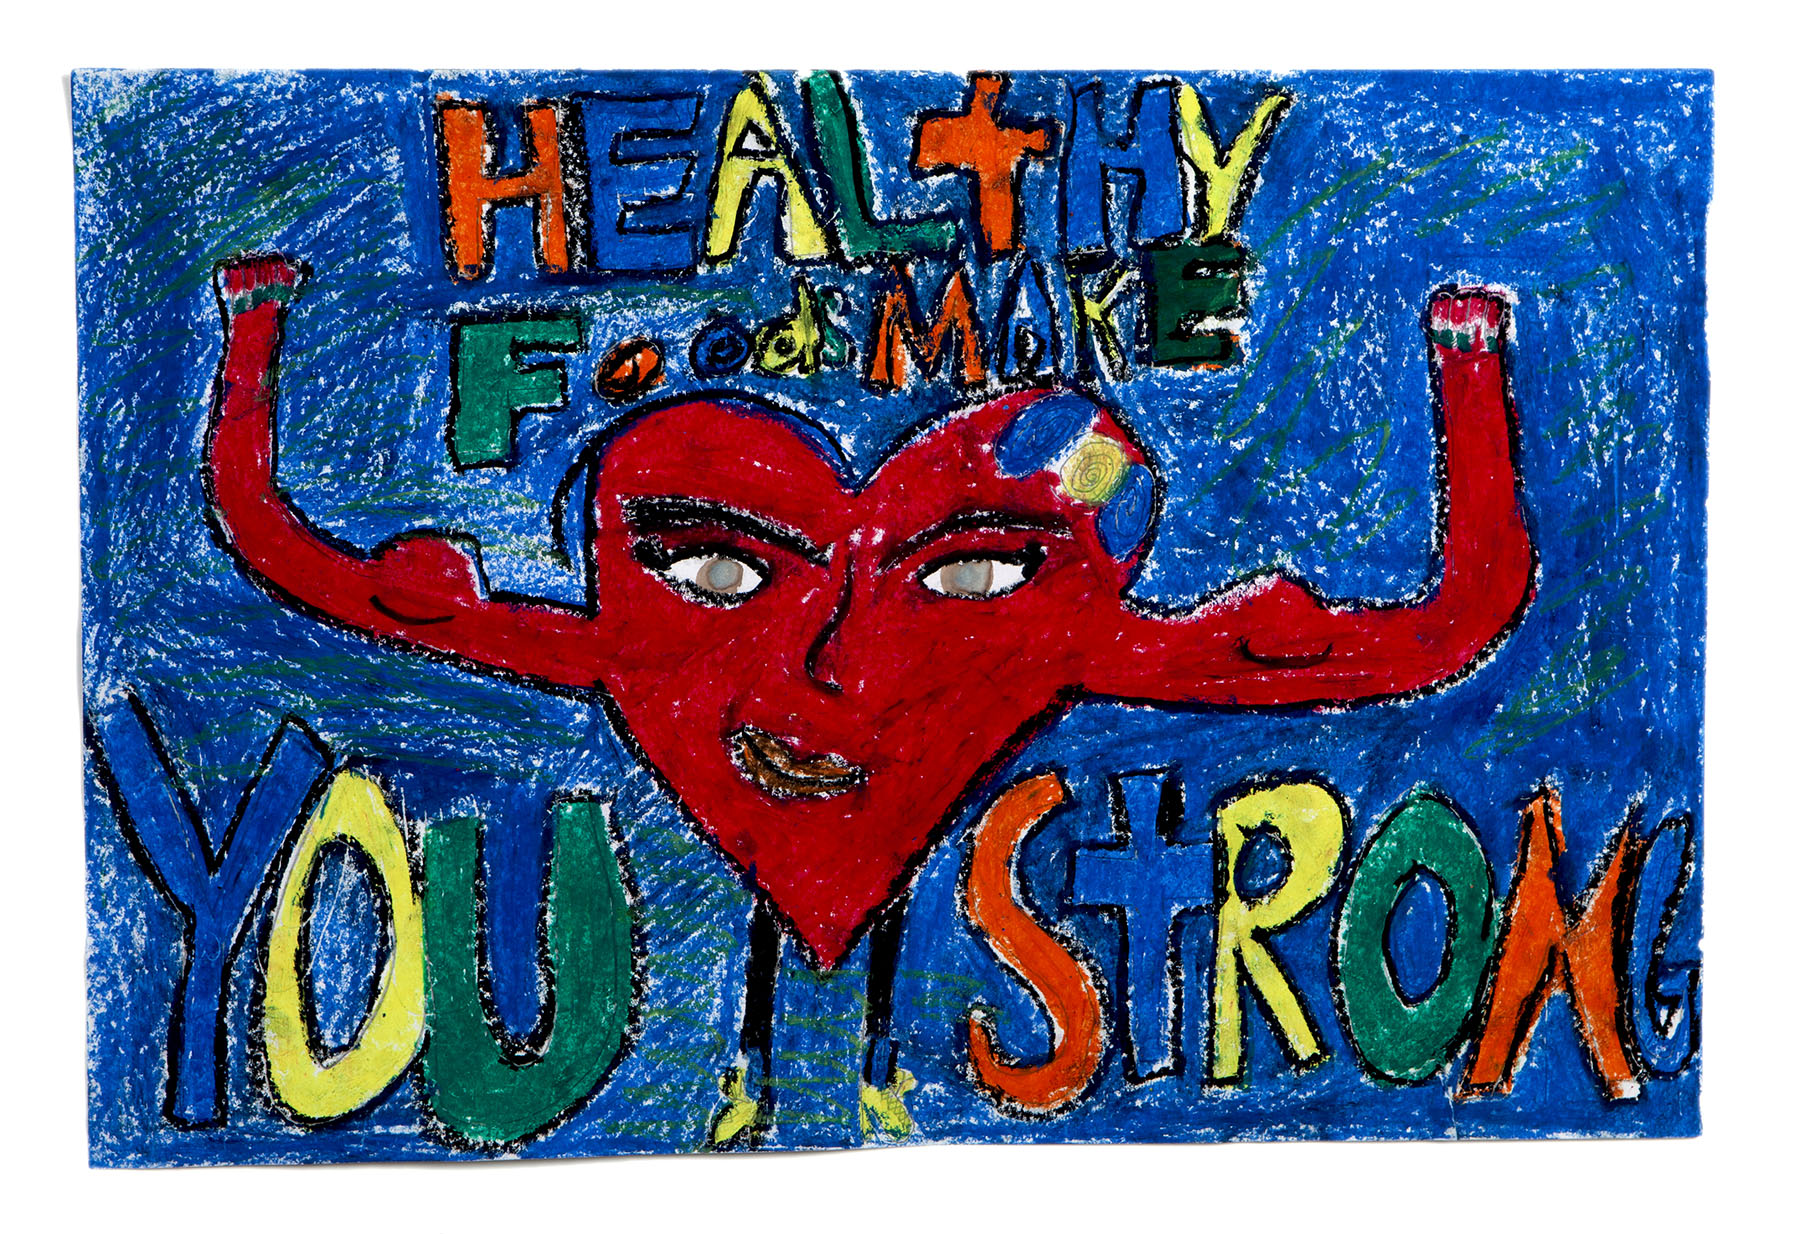 What does a healthy heart look like to you? - Giana McNamar, Buckeye Elementary, Shingle Springs